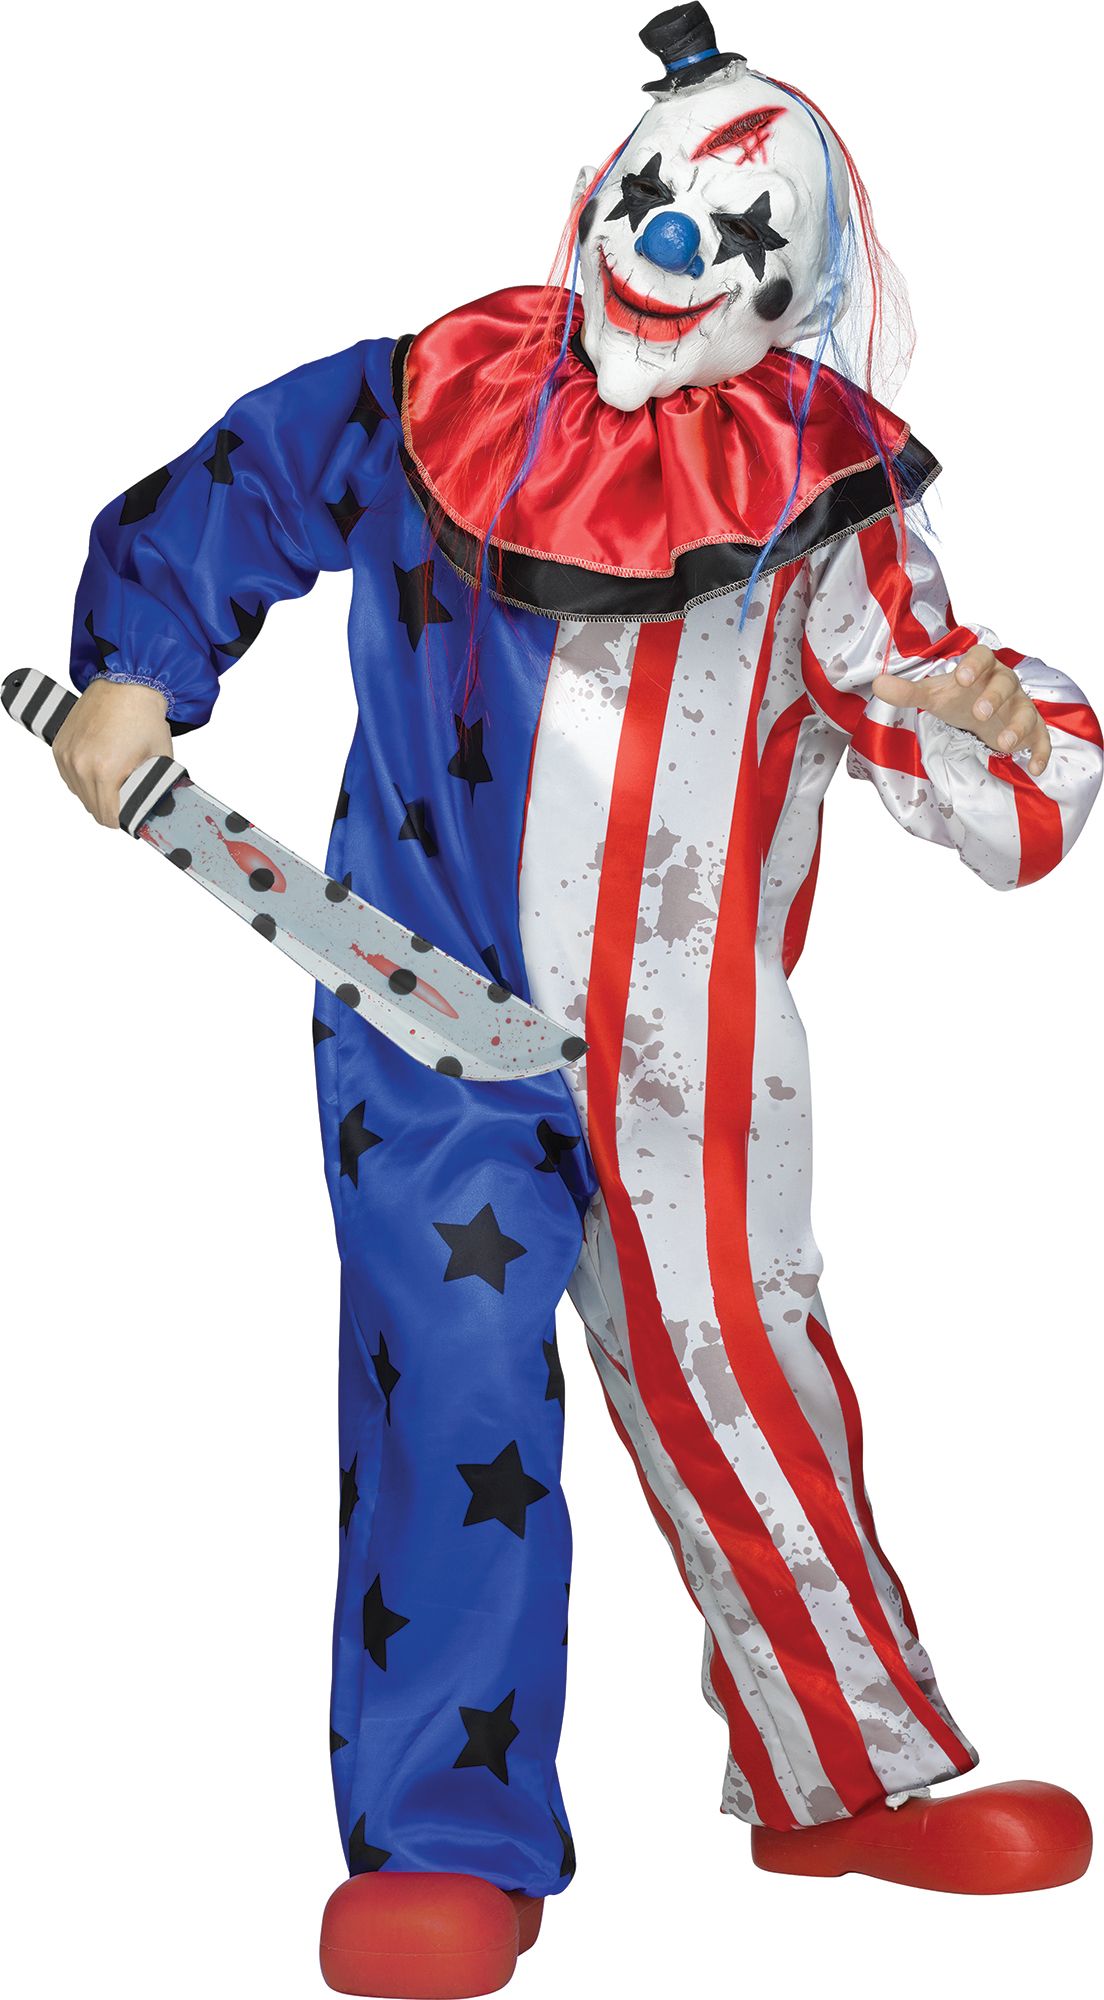 Child Evil Clown Costume